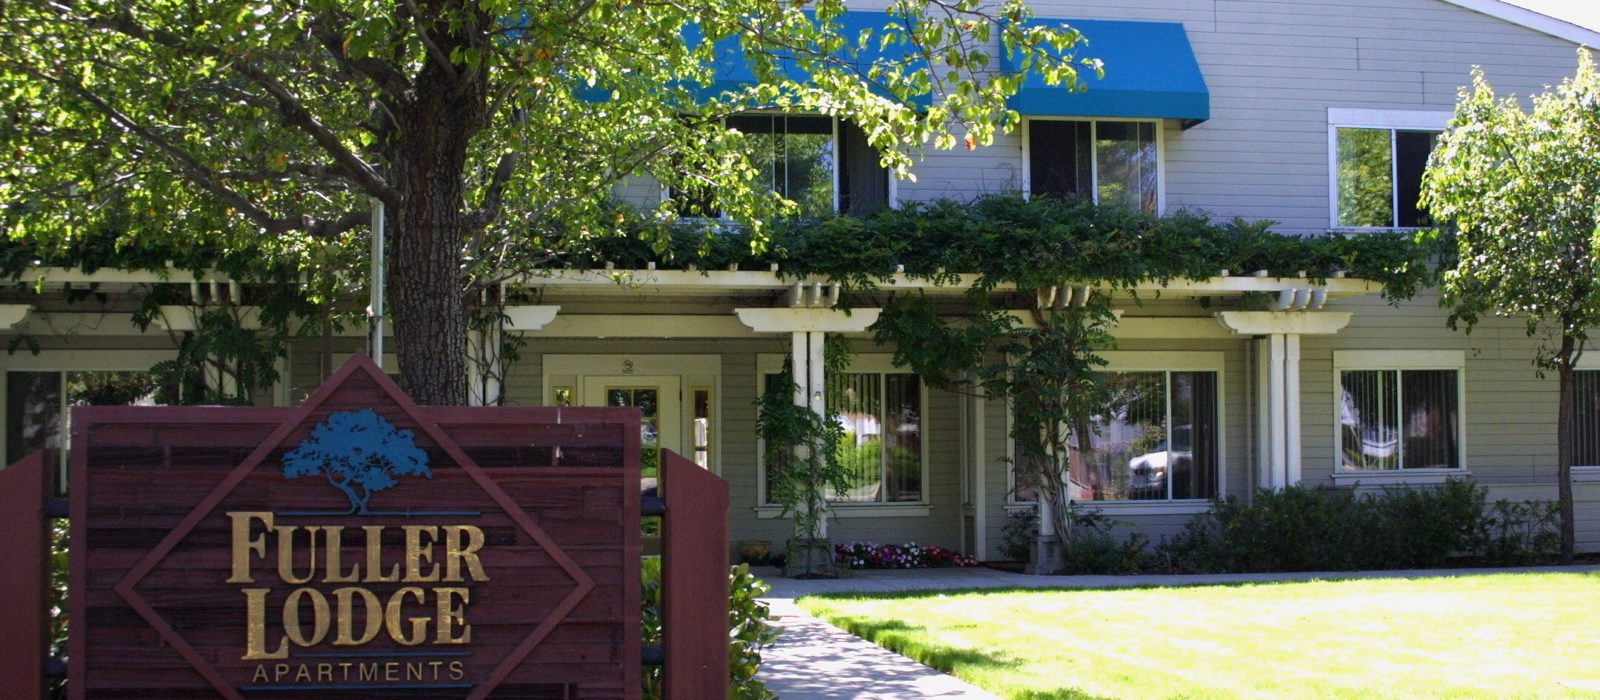 Fuller Lodge Apartments